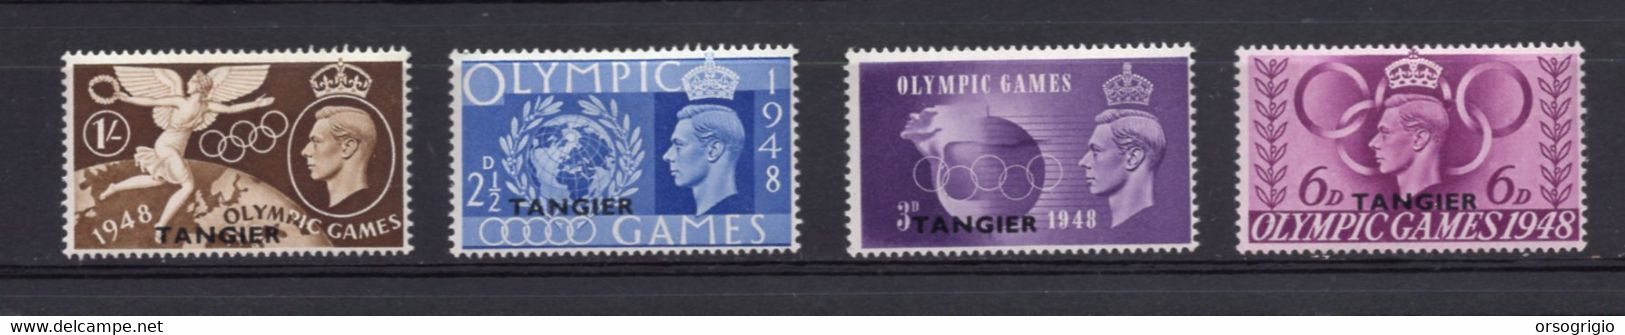 GRAN BRETAGNA - OLYMPIC GAMES - TANGIER - Summer 1948: London